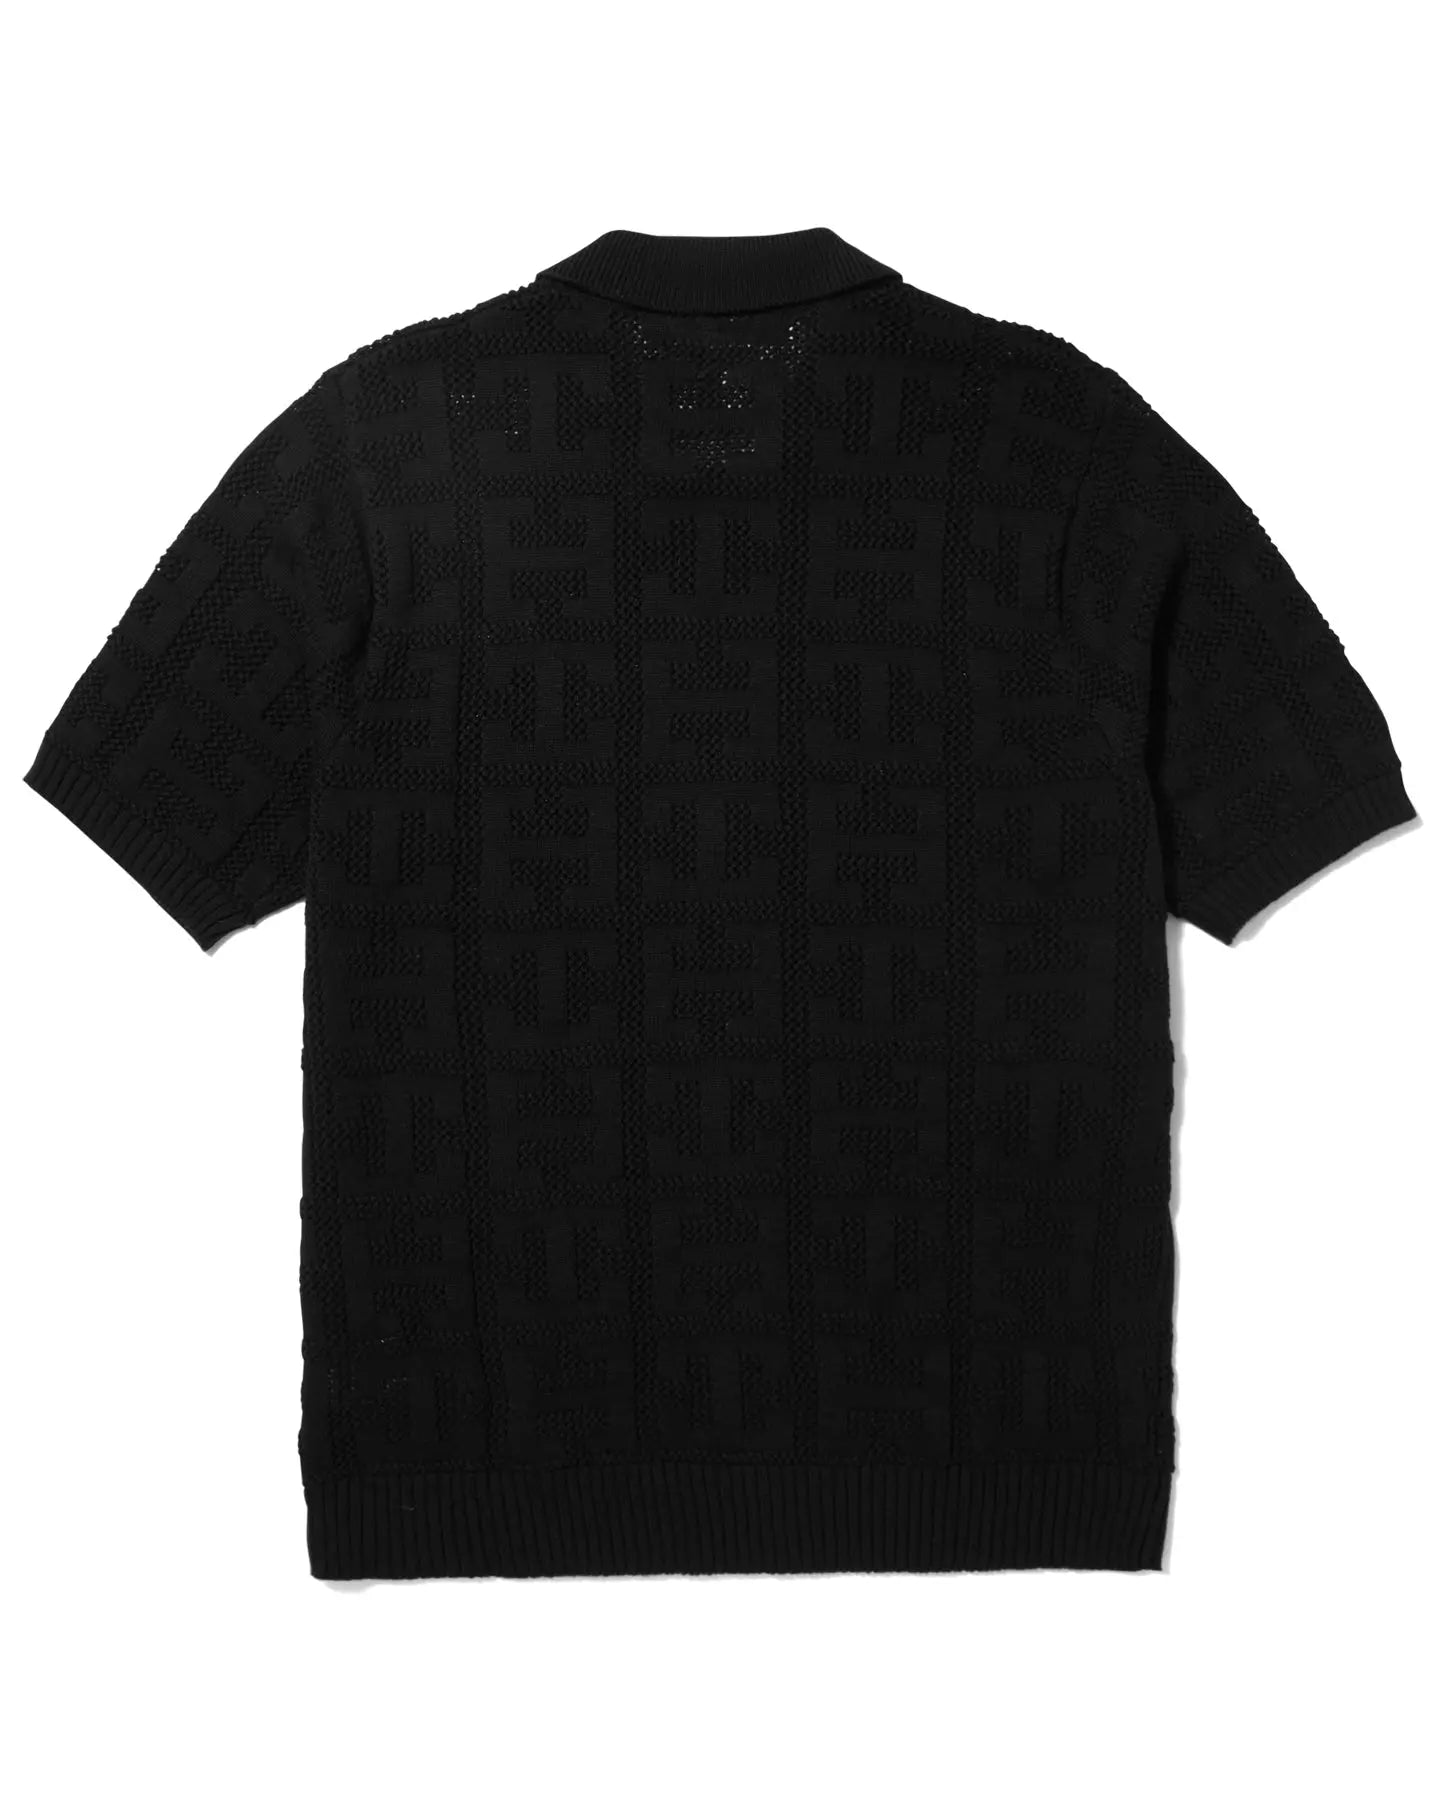 HUF Monogram Jacquard Zip Sweater - Black Sweaters